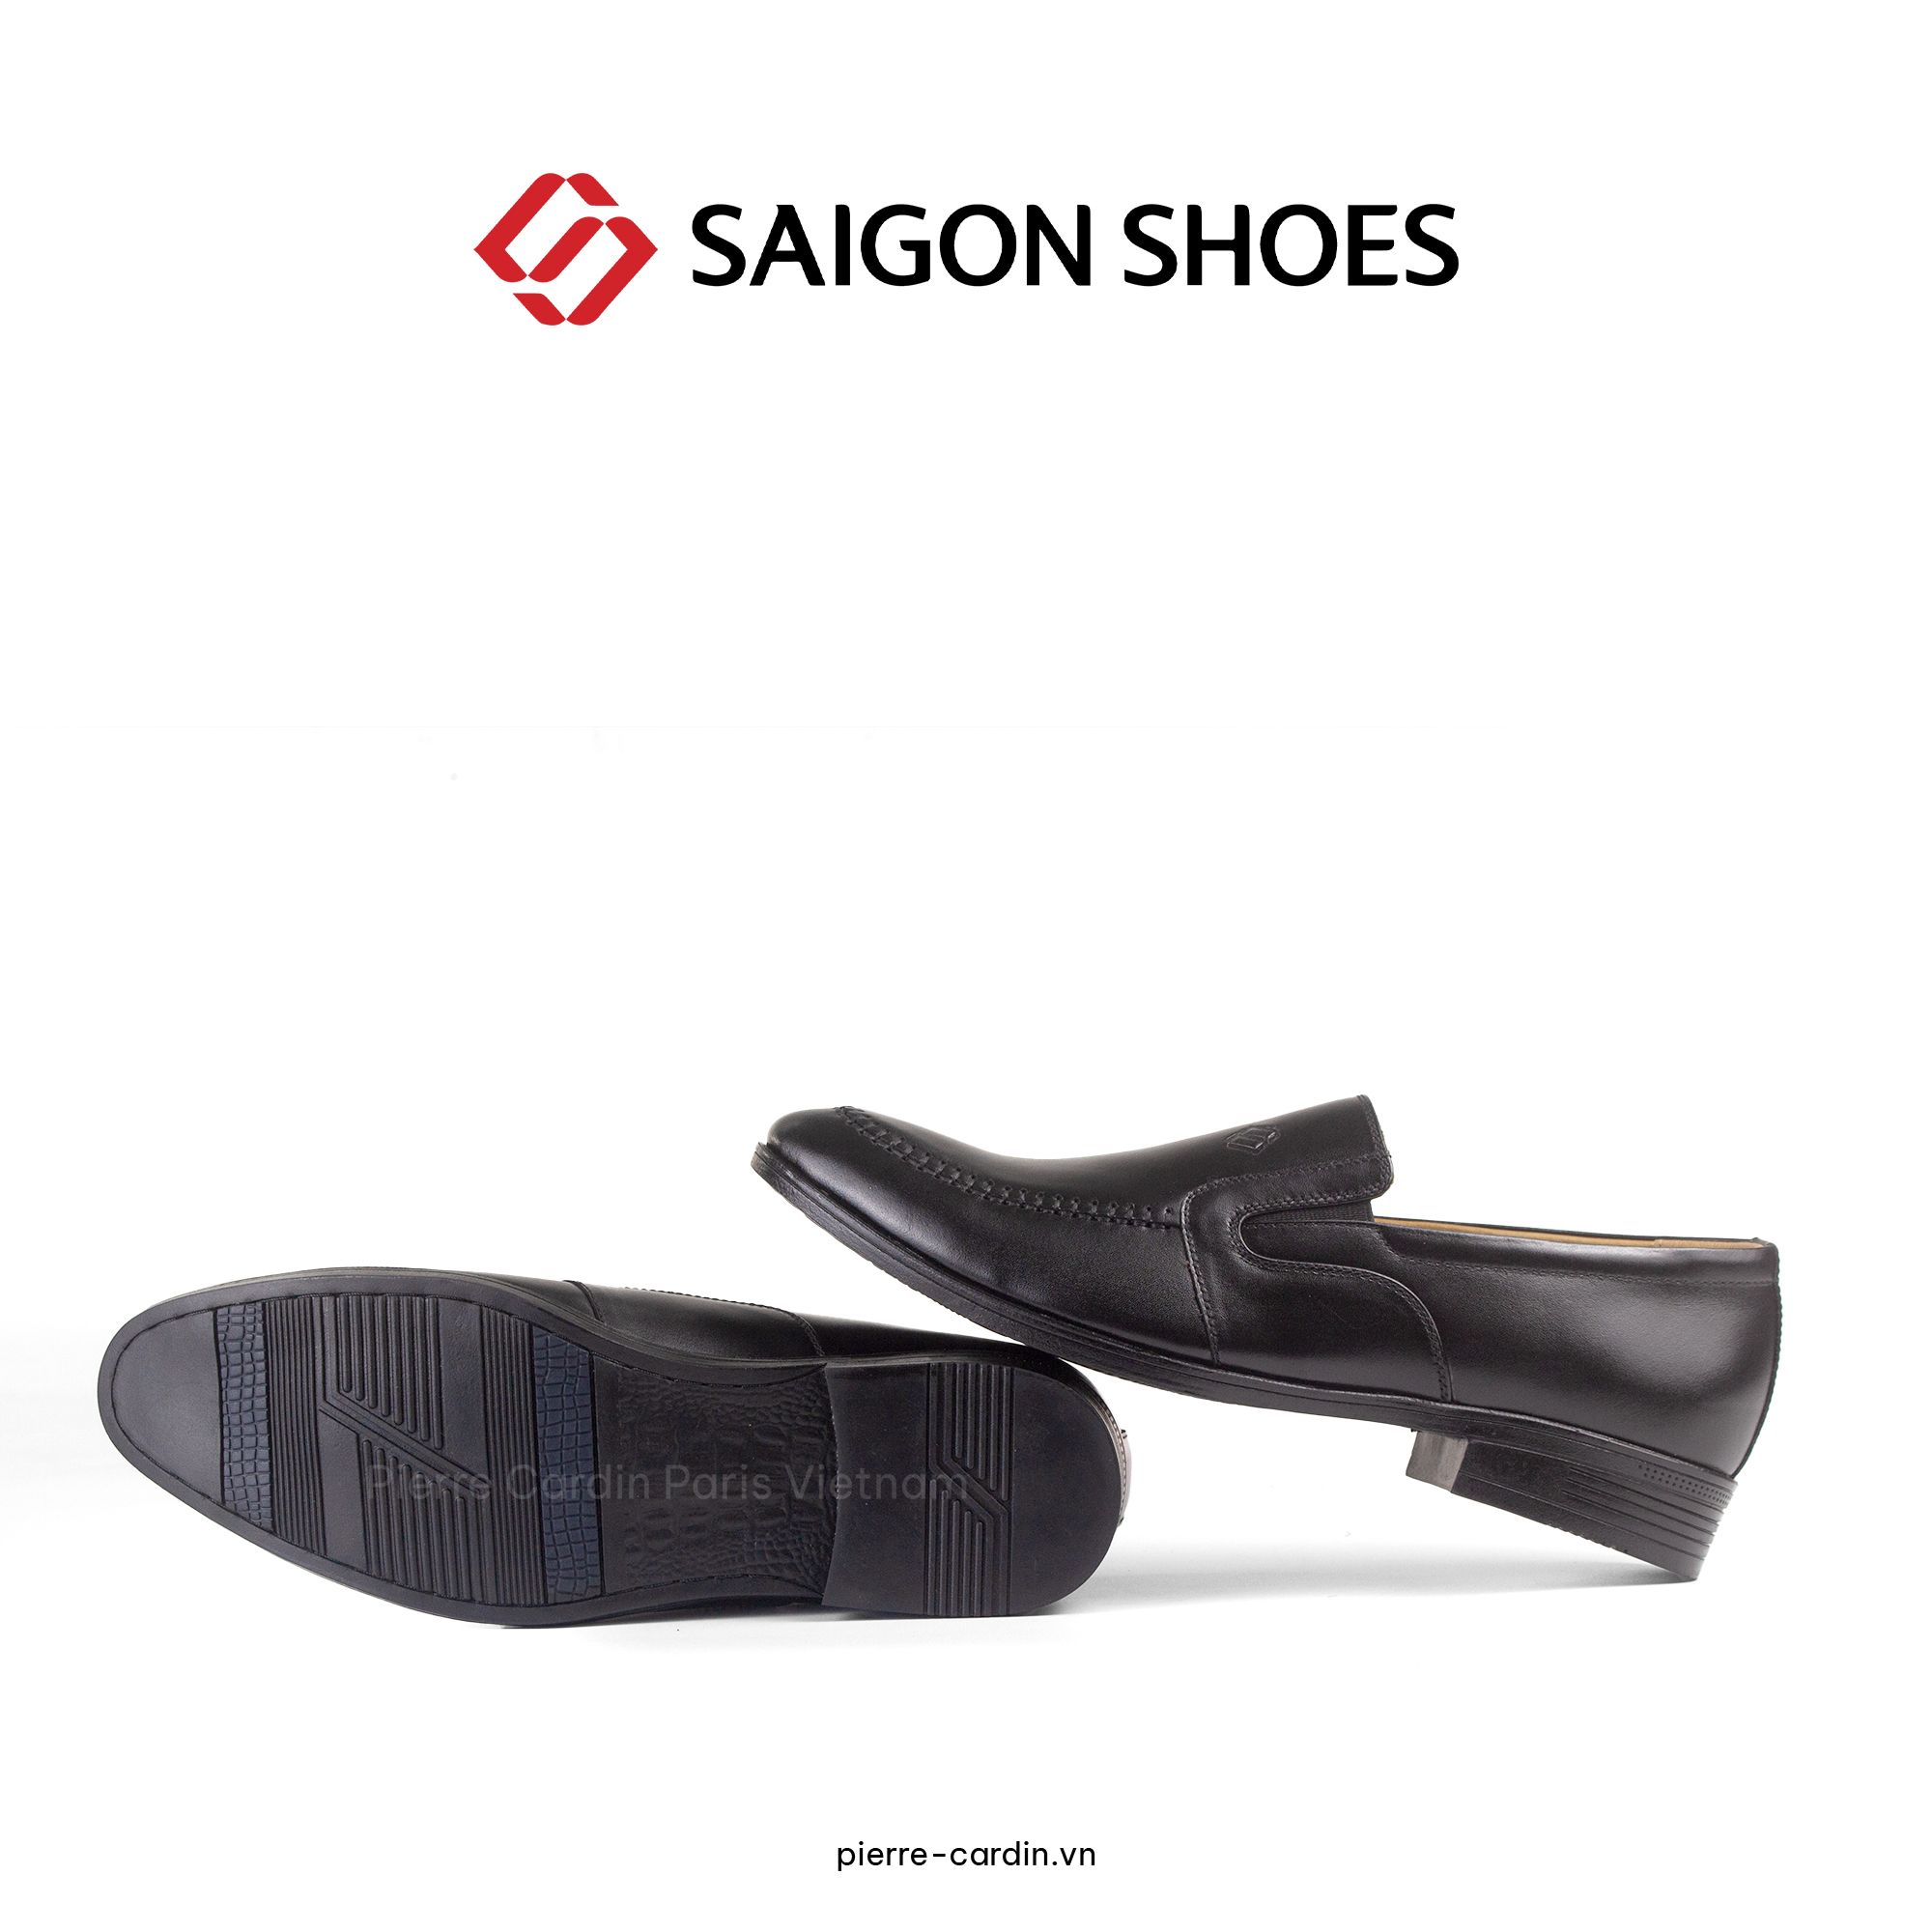 Pierre Cardin Paris Vietnam: Giày Lười Saigon Shoes - SGMFWLH 004